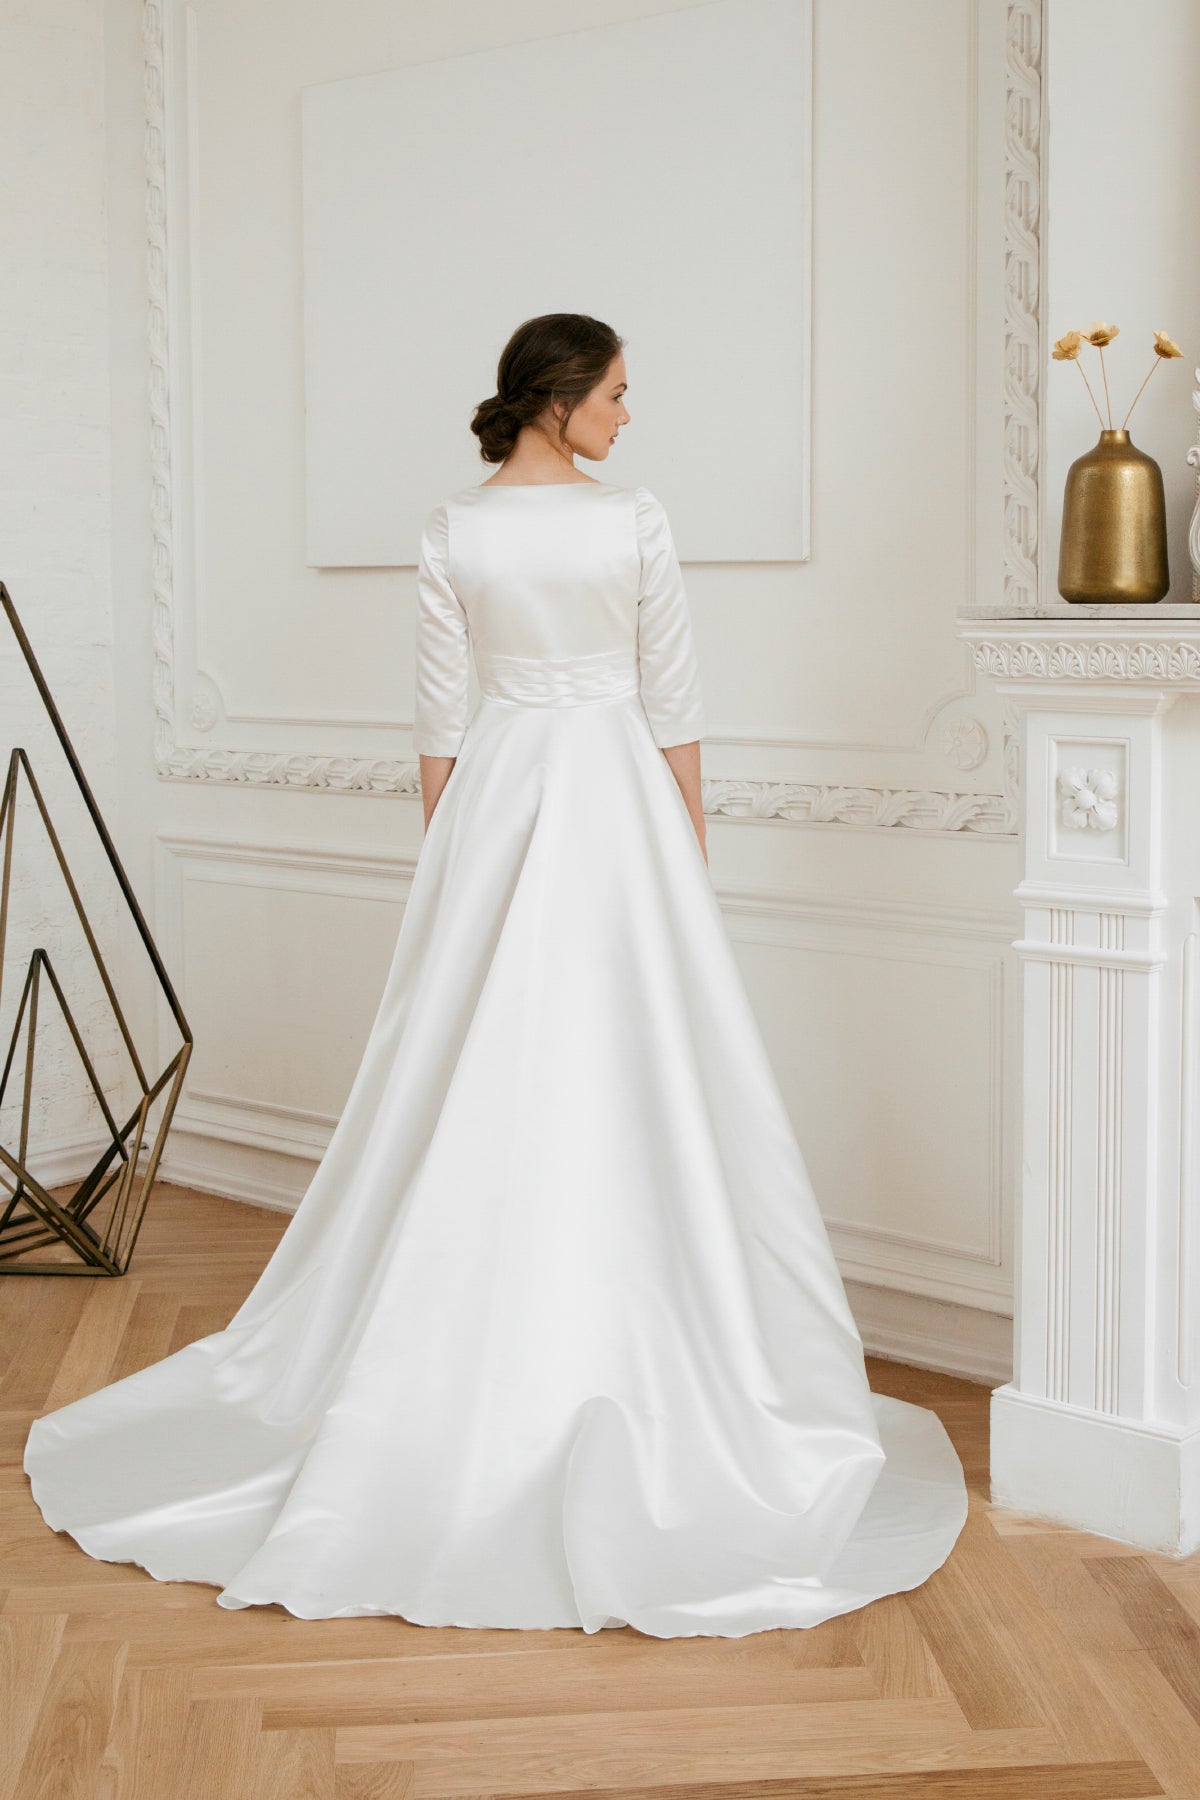 Long sleeve wedding dress • simple wedding dress • deep v-neck • minimalist wedding dress • elegant bridal gown • modest wedding dress